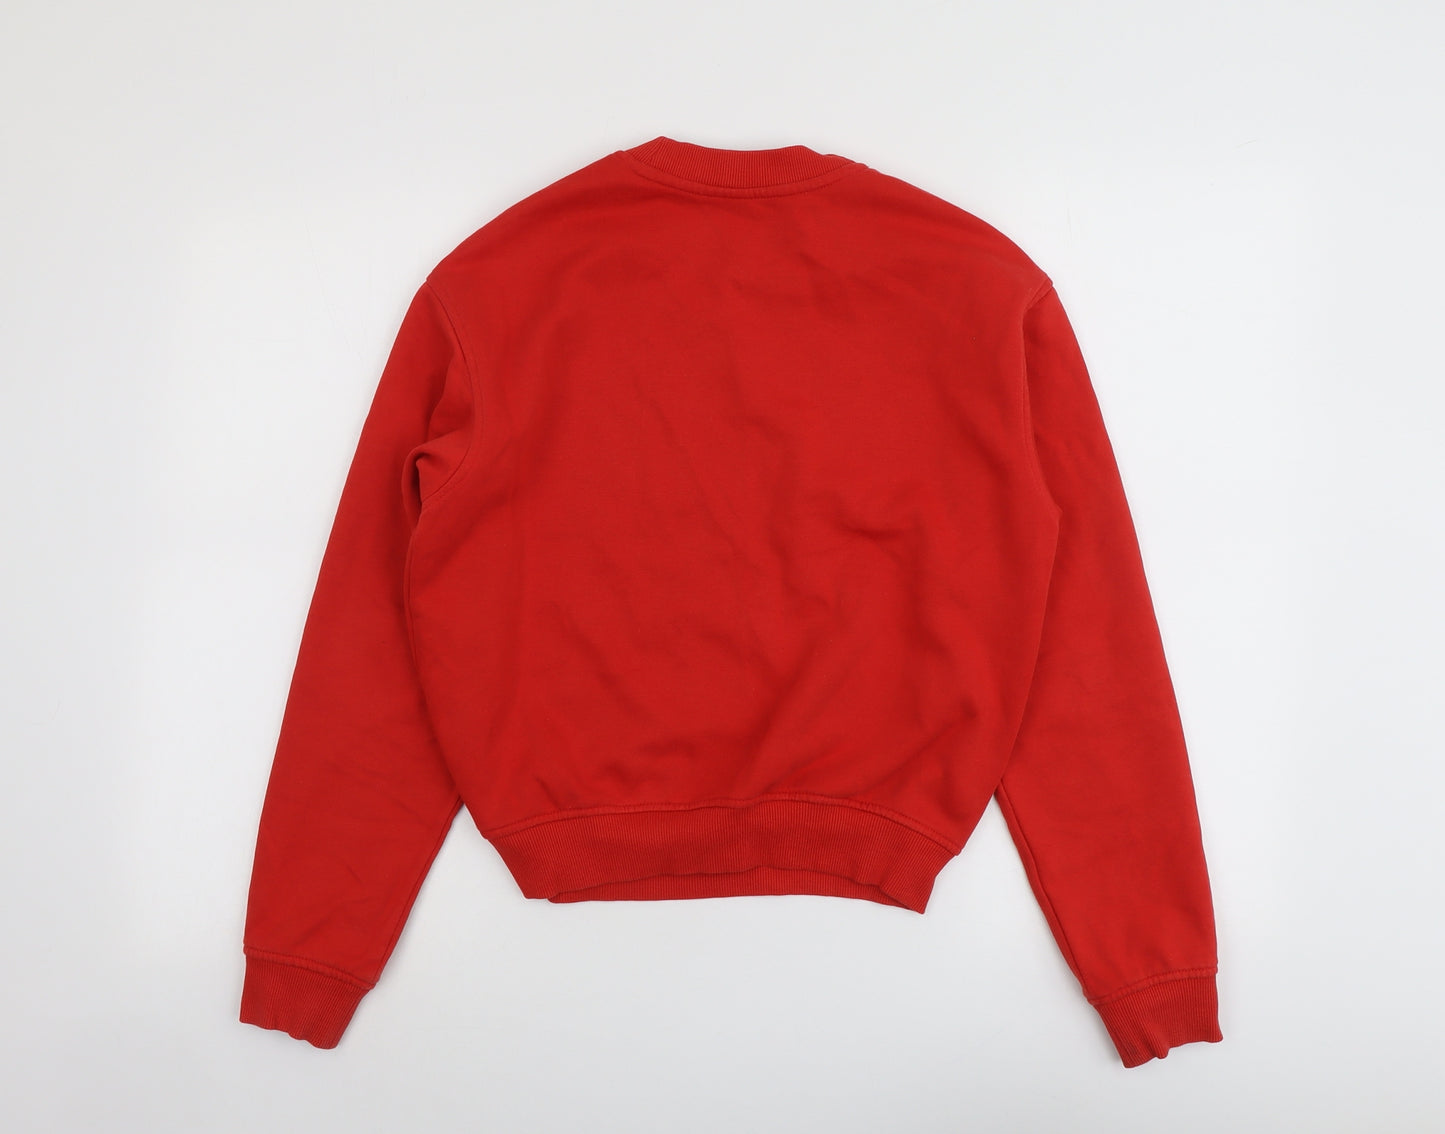 H&M Womens Red Cotton Pullover Sweatshirt Size S Pullover - Orlando